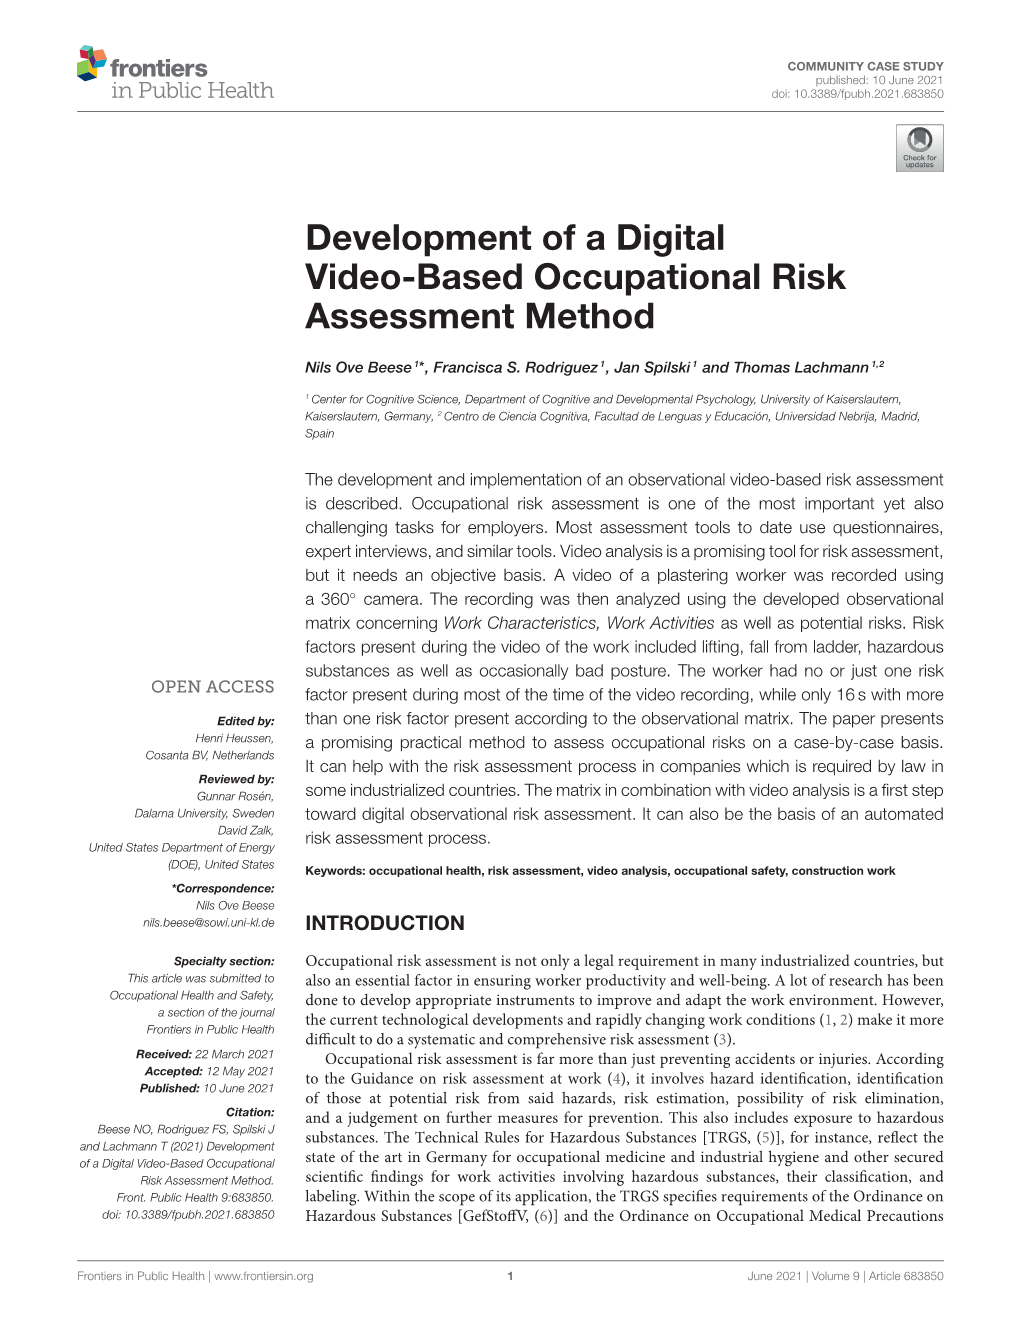 Development of a Digital Video-Based Occupational Risk Assessment Method